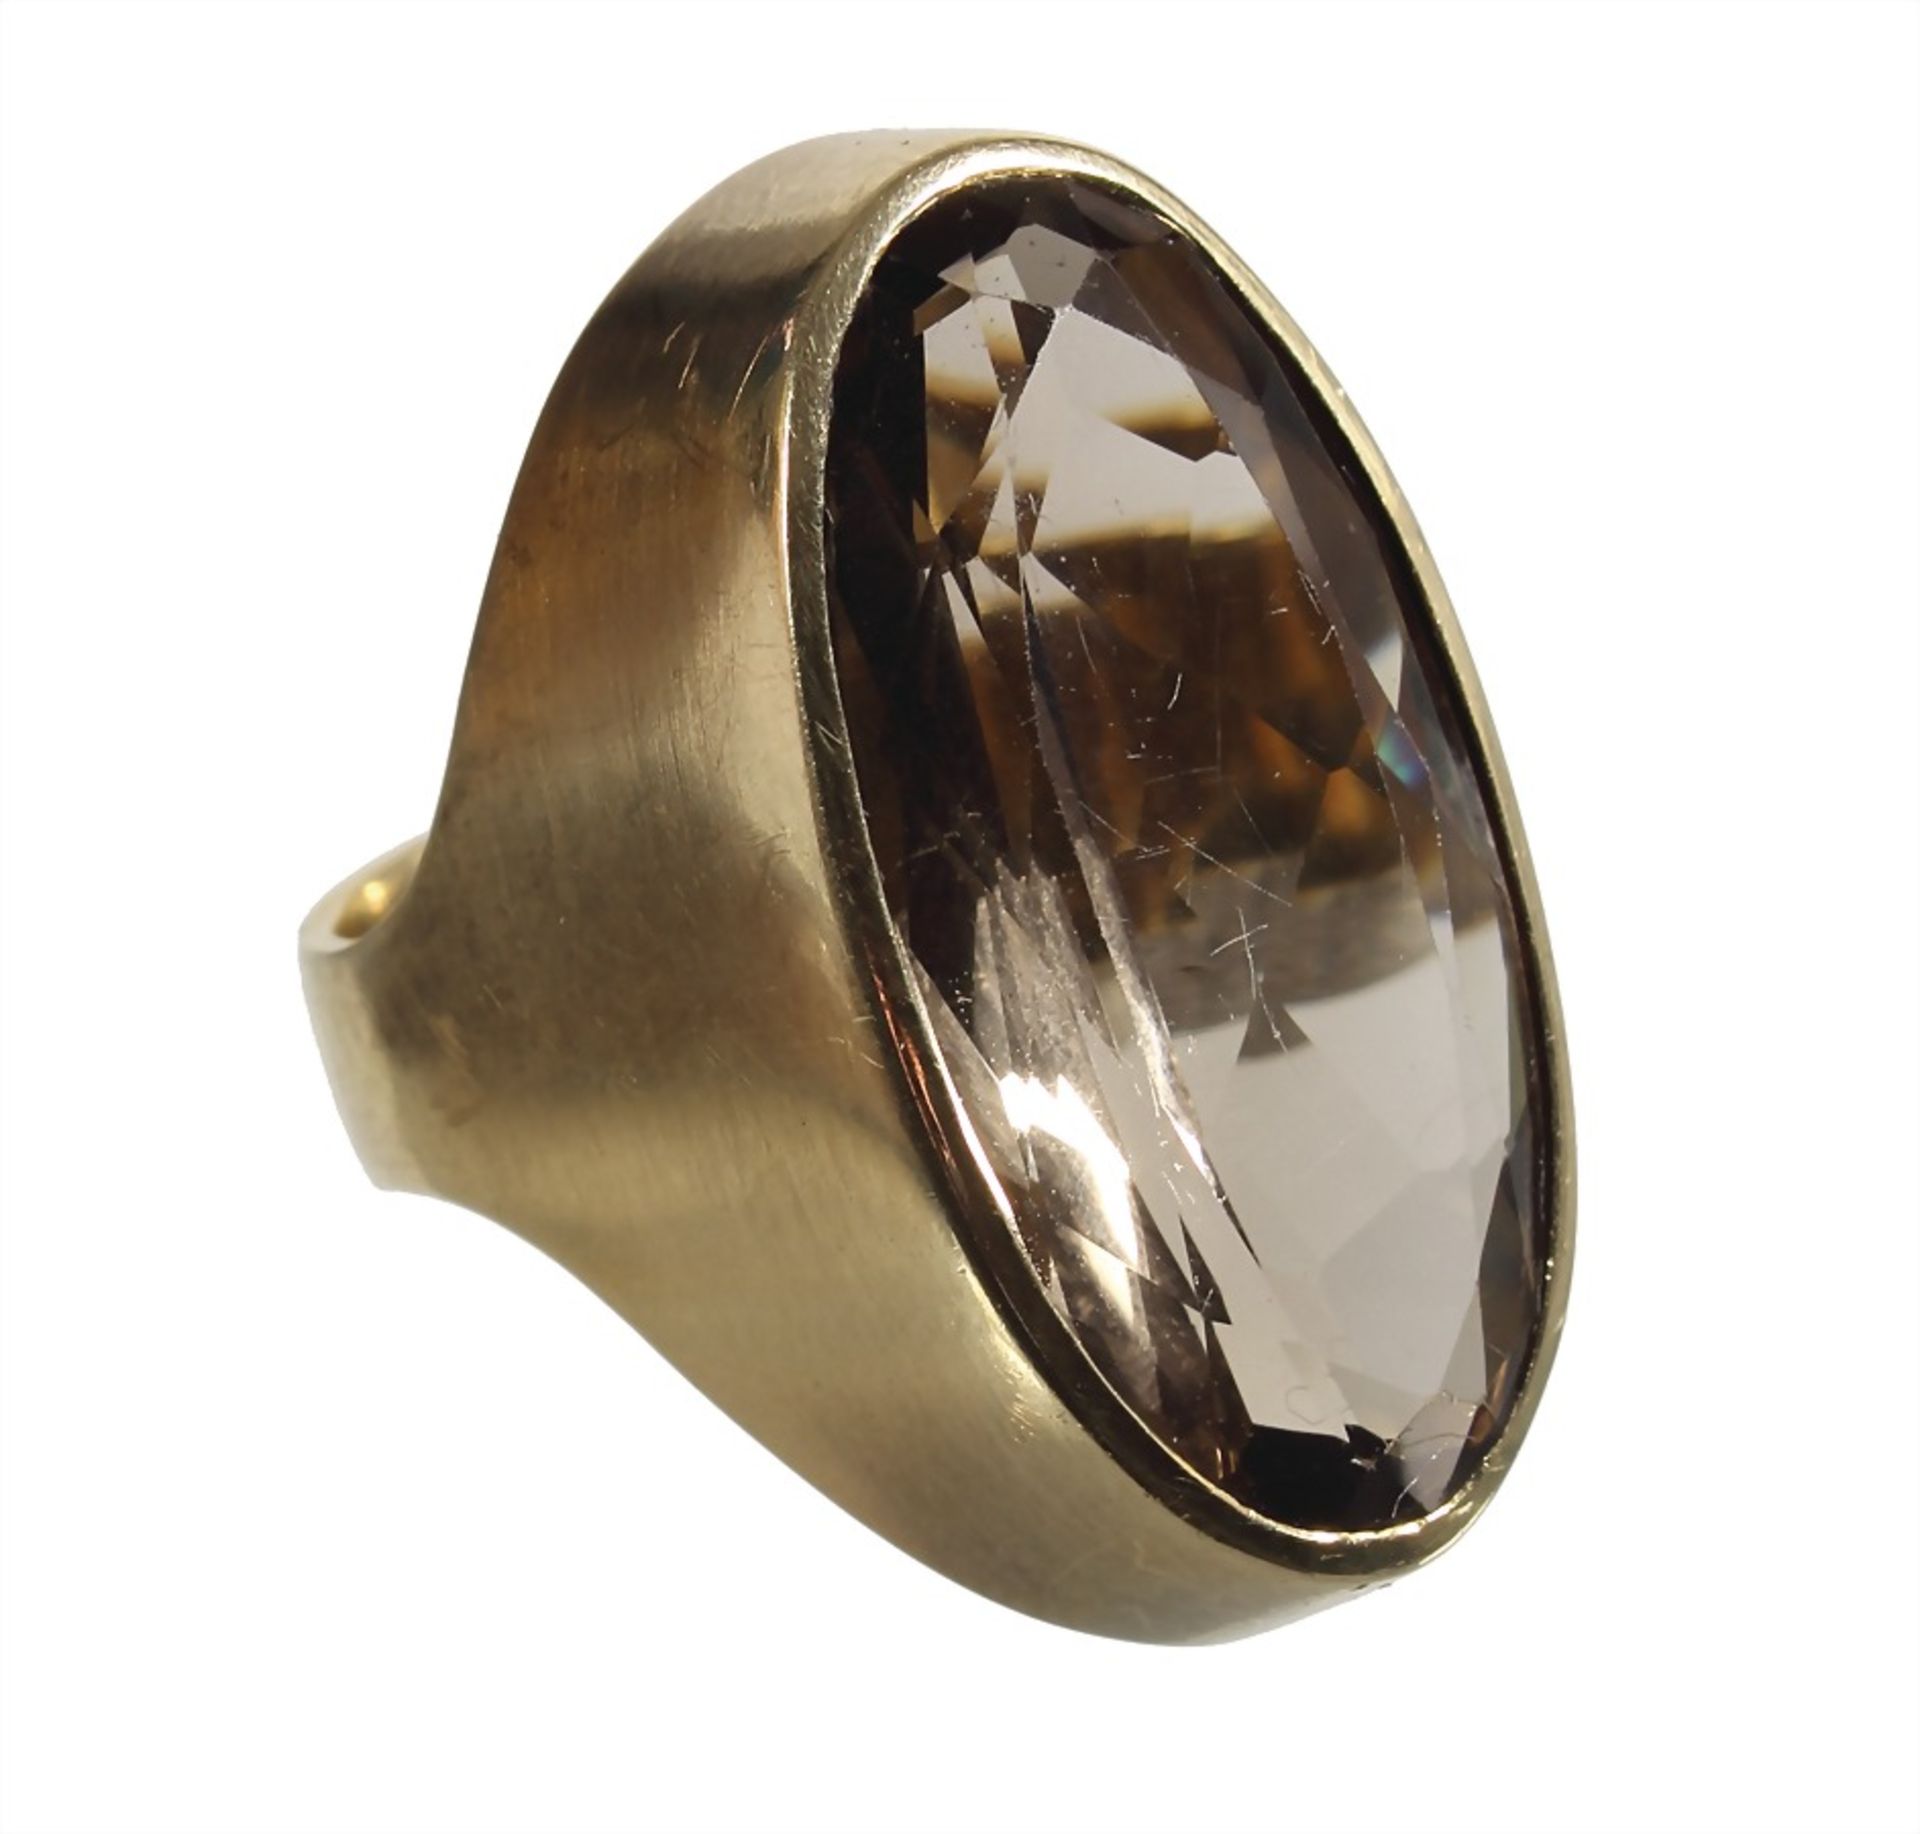 ring, yelow gold 585/000, smoky quartz c. 20.0 ct (20 x 14 mm), ring width c. 57